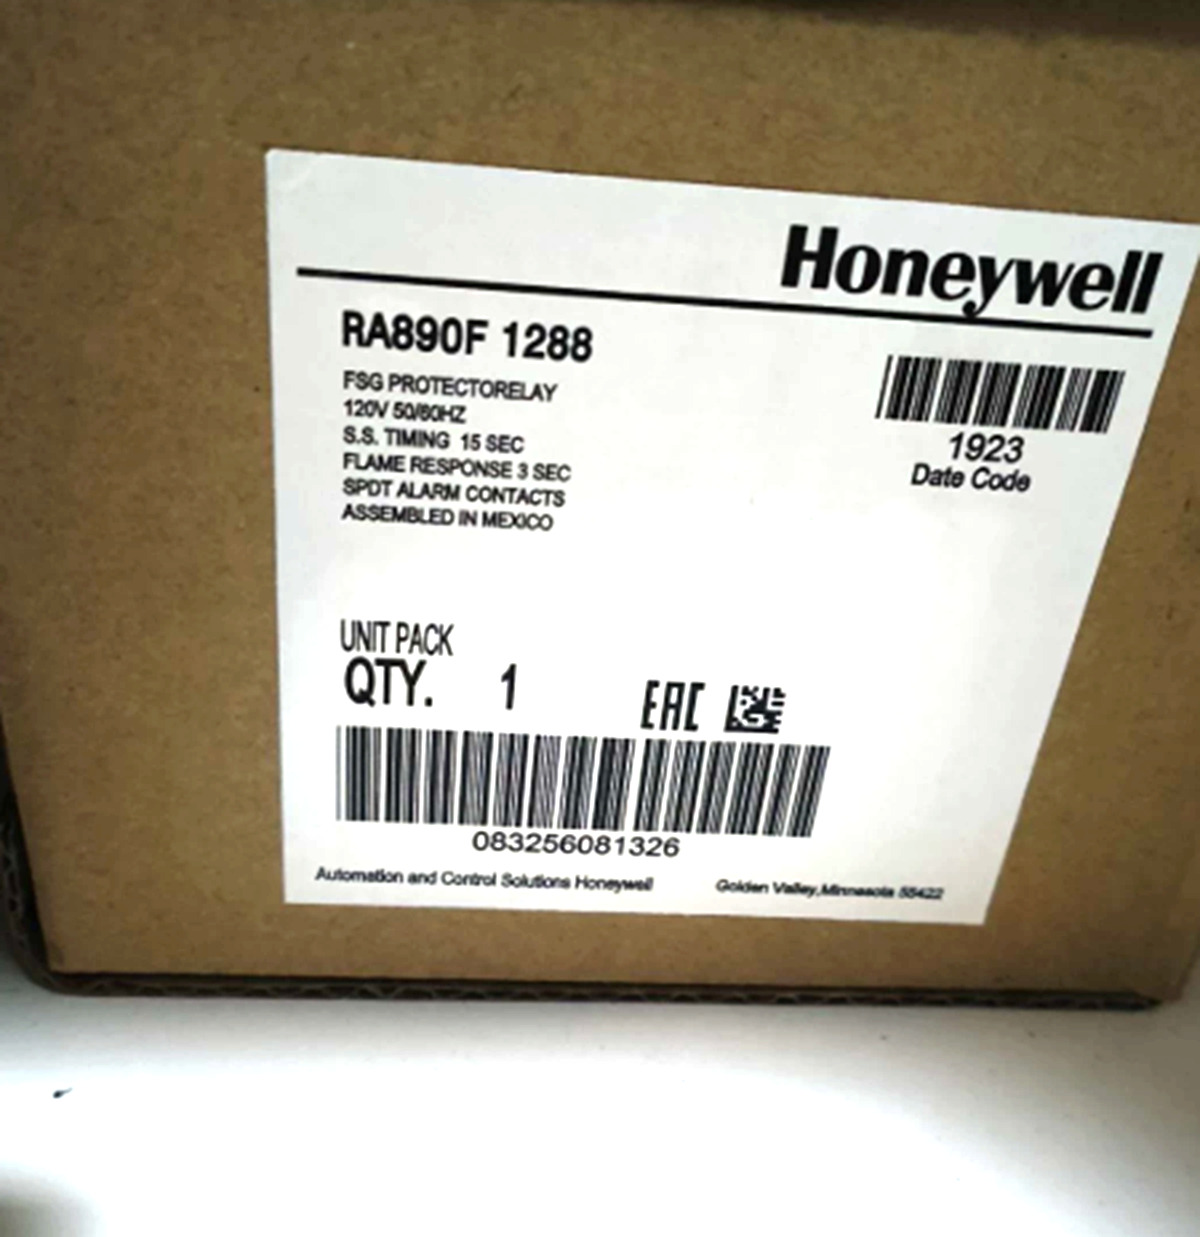 New Honeywell RA890F1288 RA890F 1288 Protectorelay Primary Control Fast Ship